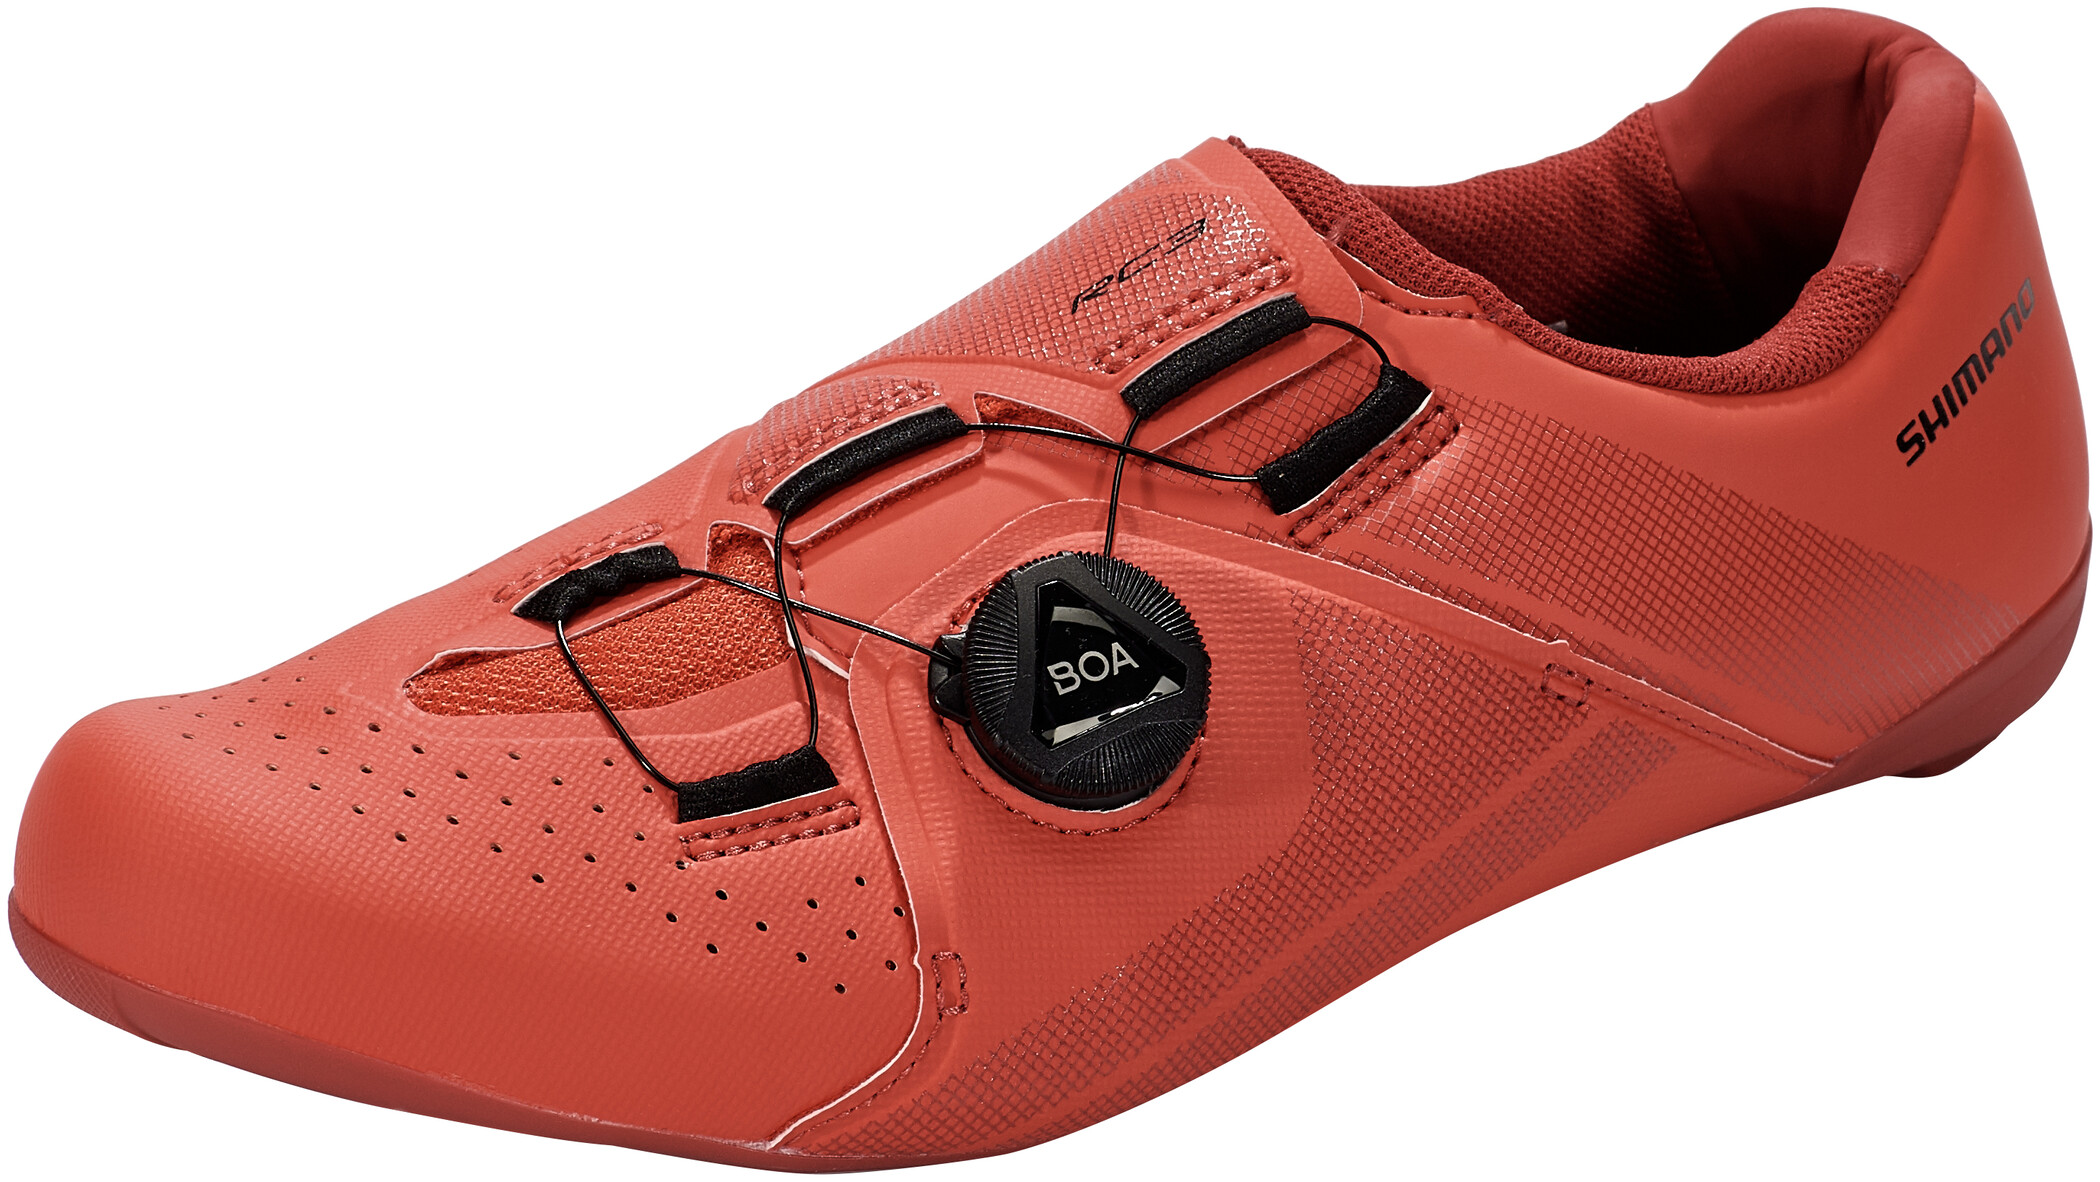 Shimano SH-RC3 Fahrradschuhe Weit Herren red 2021 Rad-Schuhe Radsport-schuhe rot 